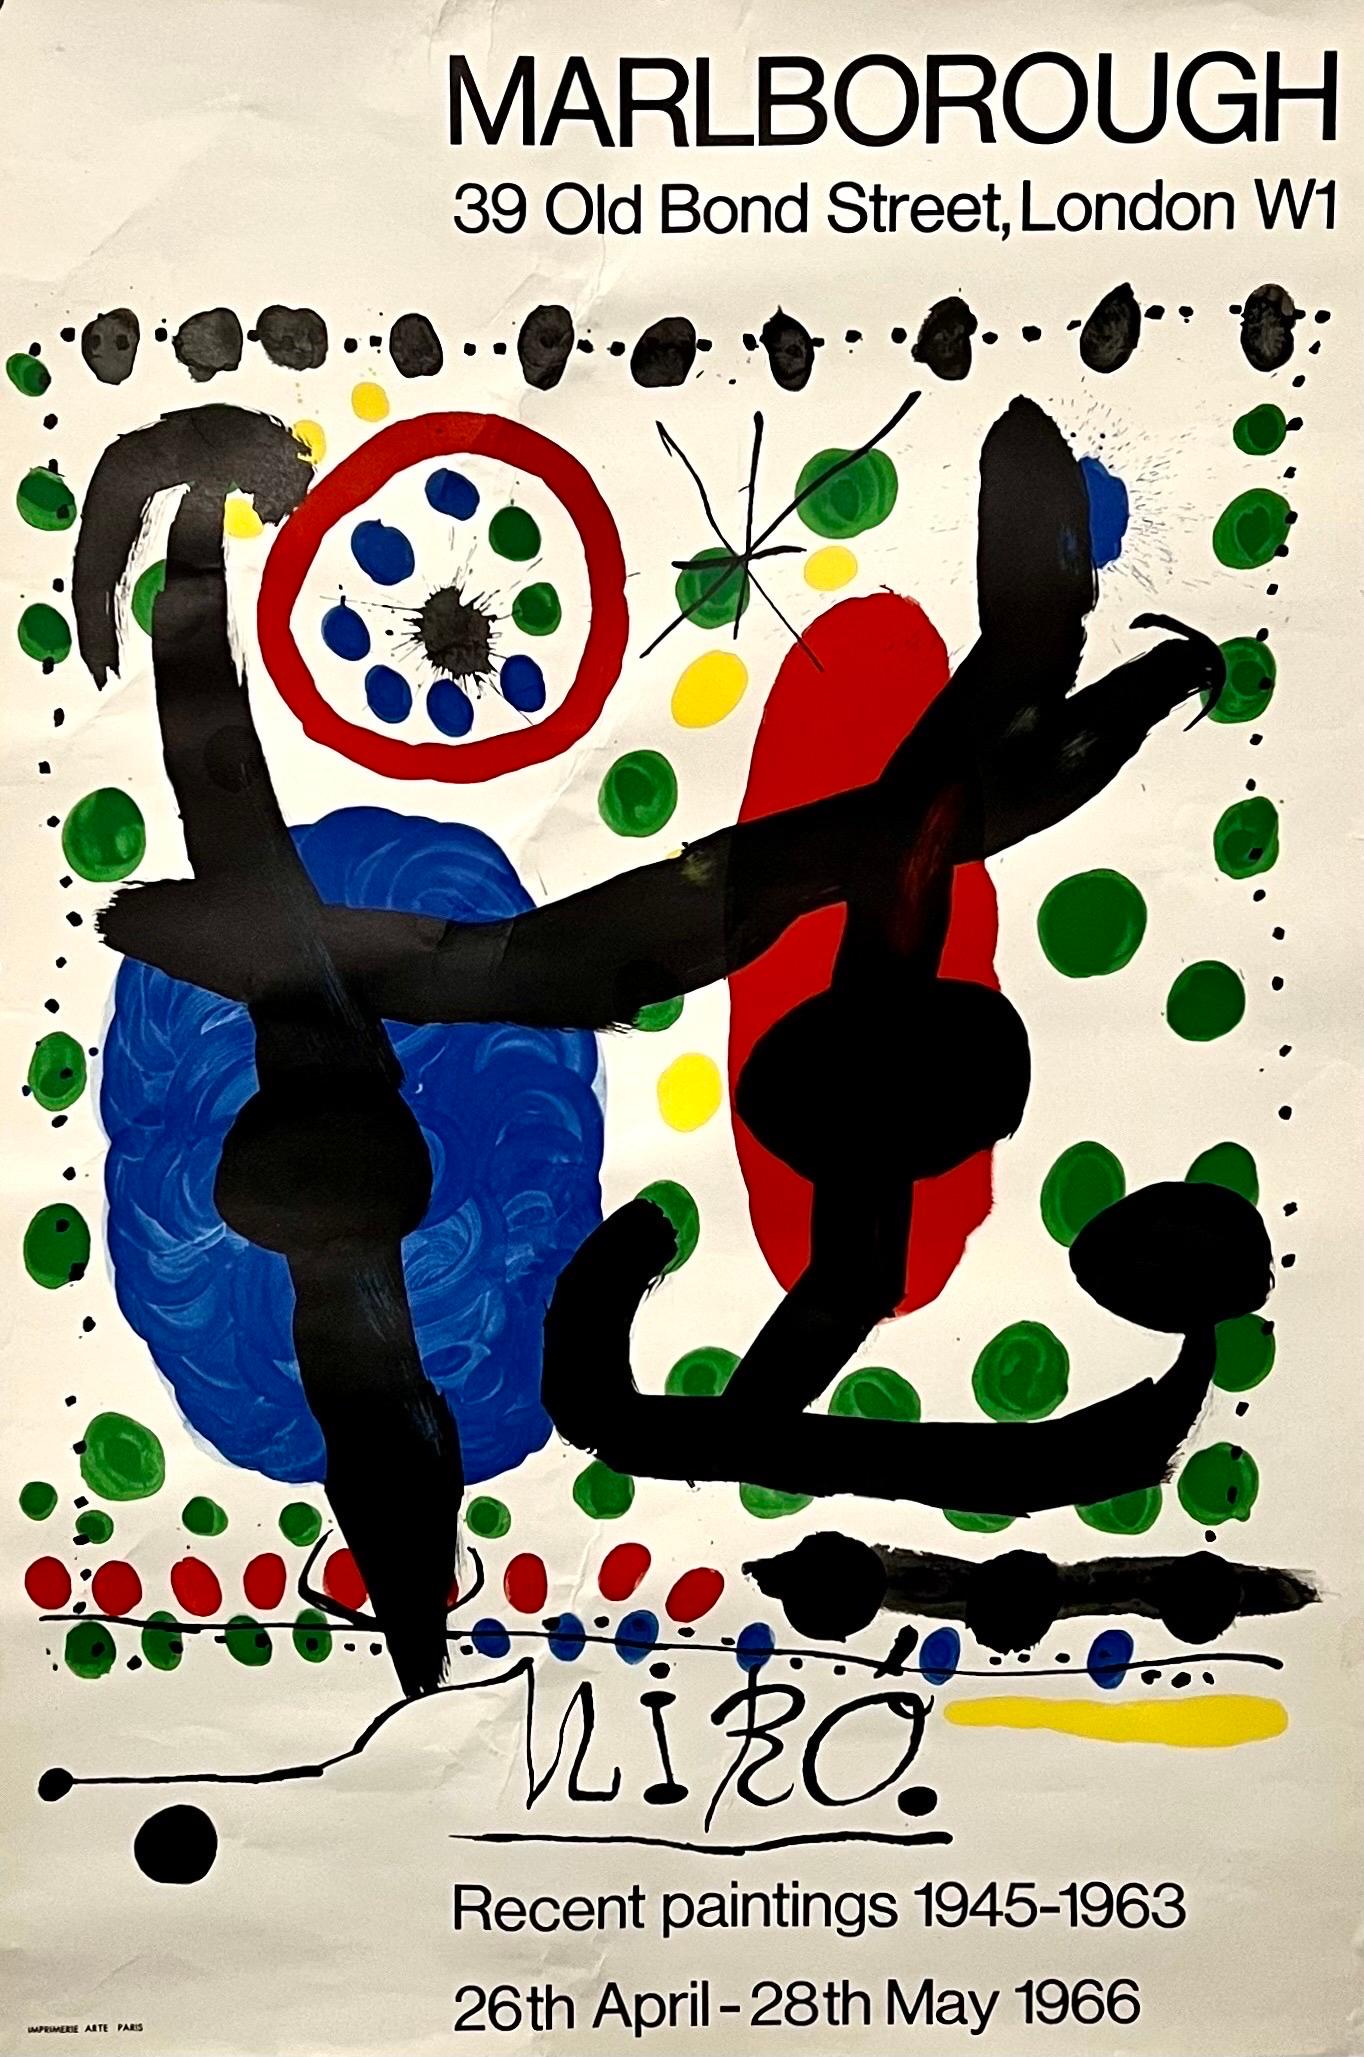 Abstract Print Joan Miró - Affiche de Joan Miro - Lithographie surraliste vintage - Adrien Maeght Marlborough Gallery